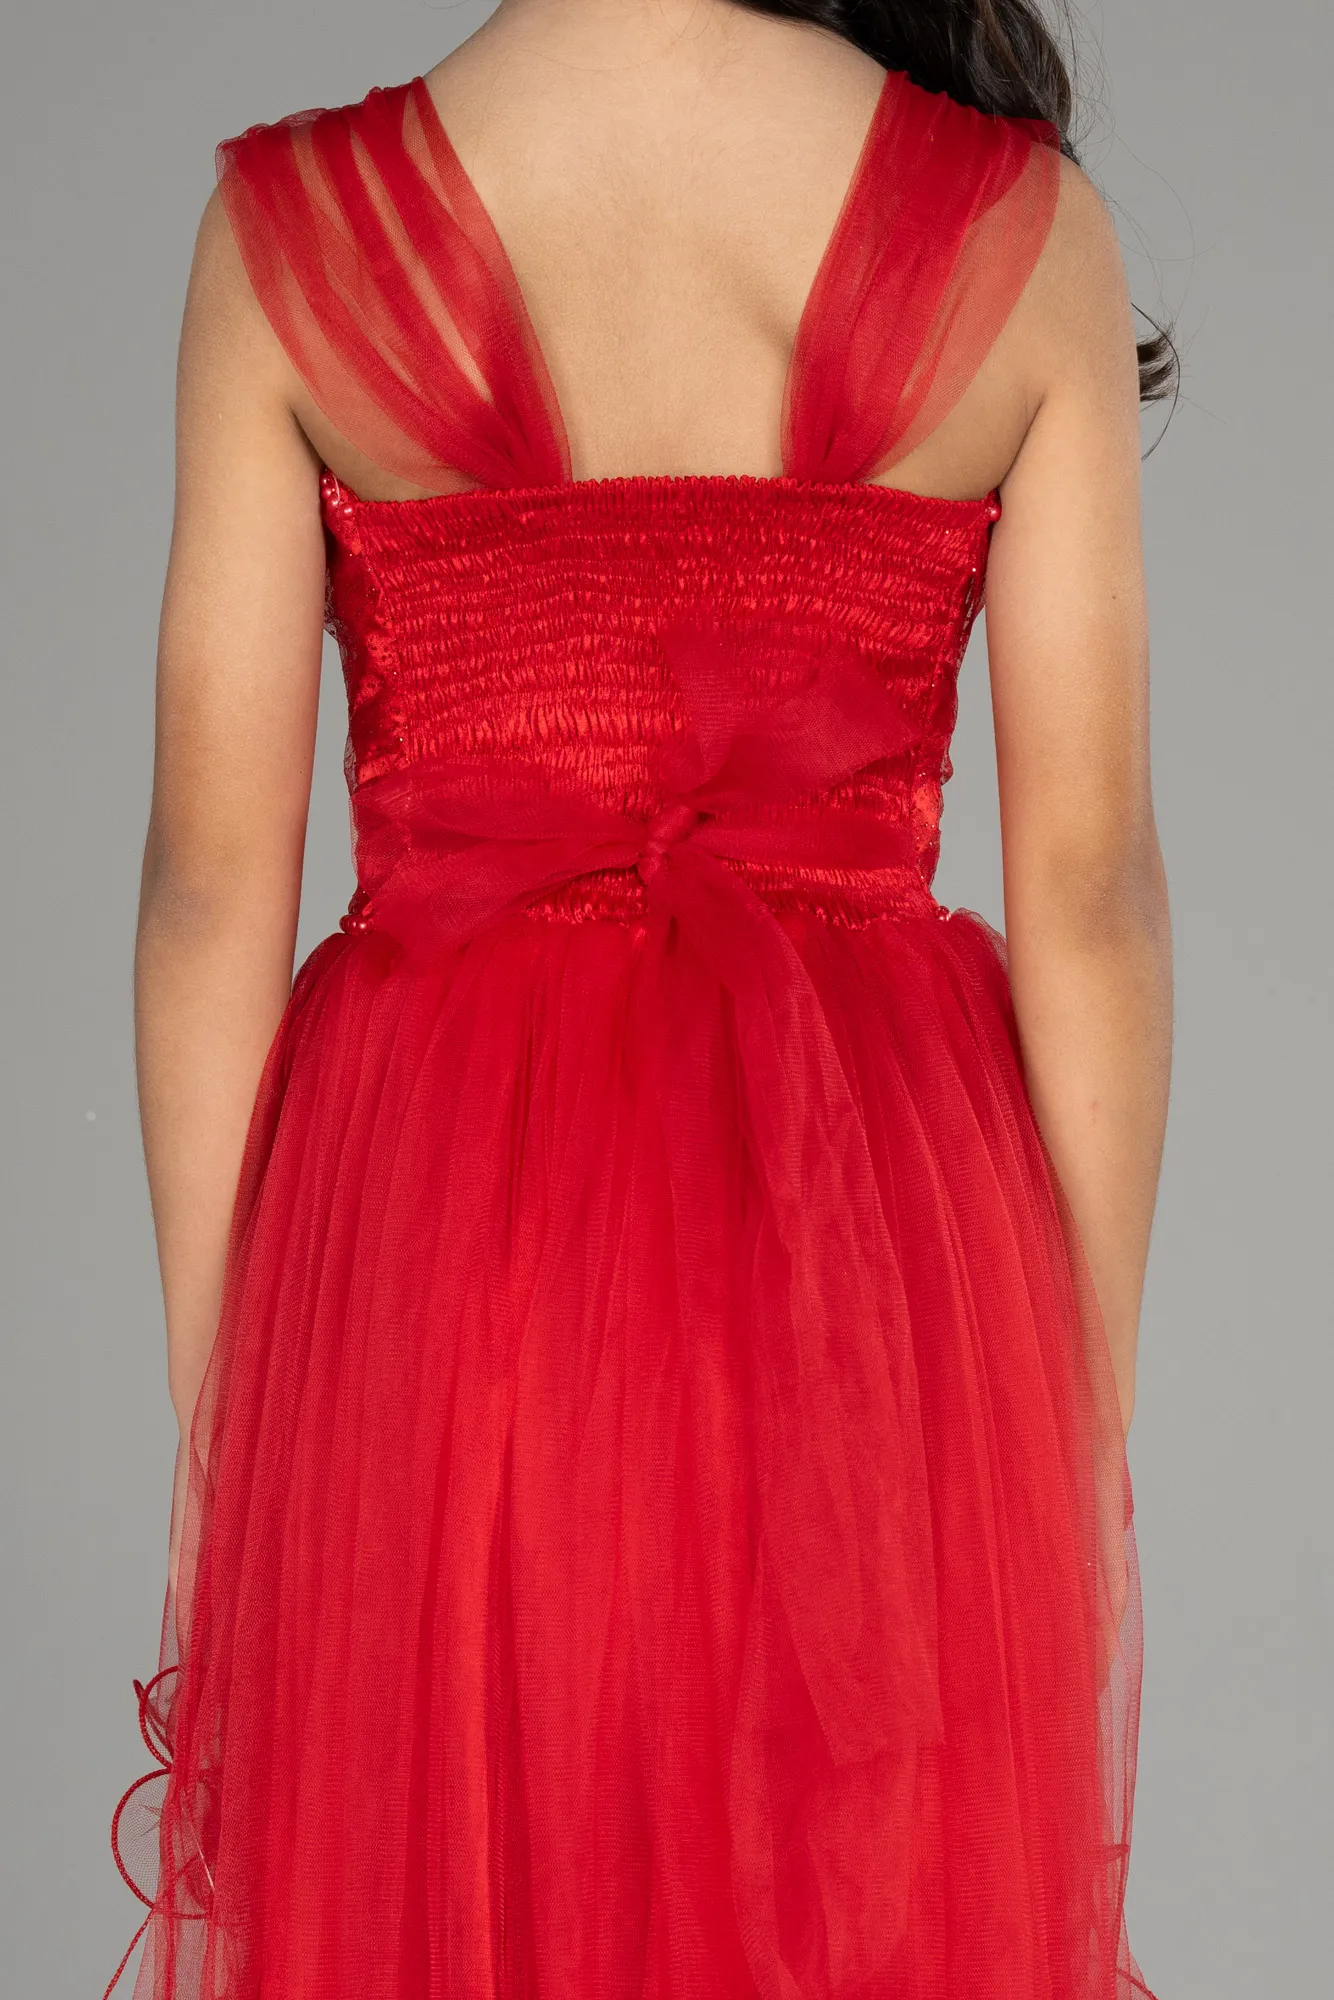 Red-Front Short Back Long Girl Dress ABO105